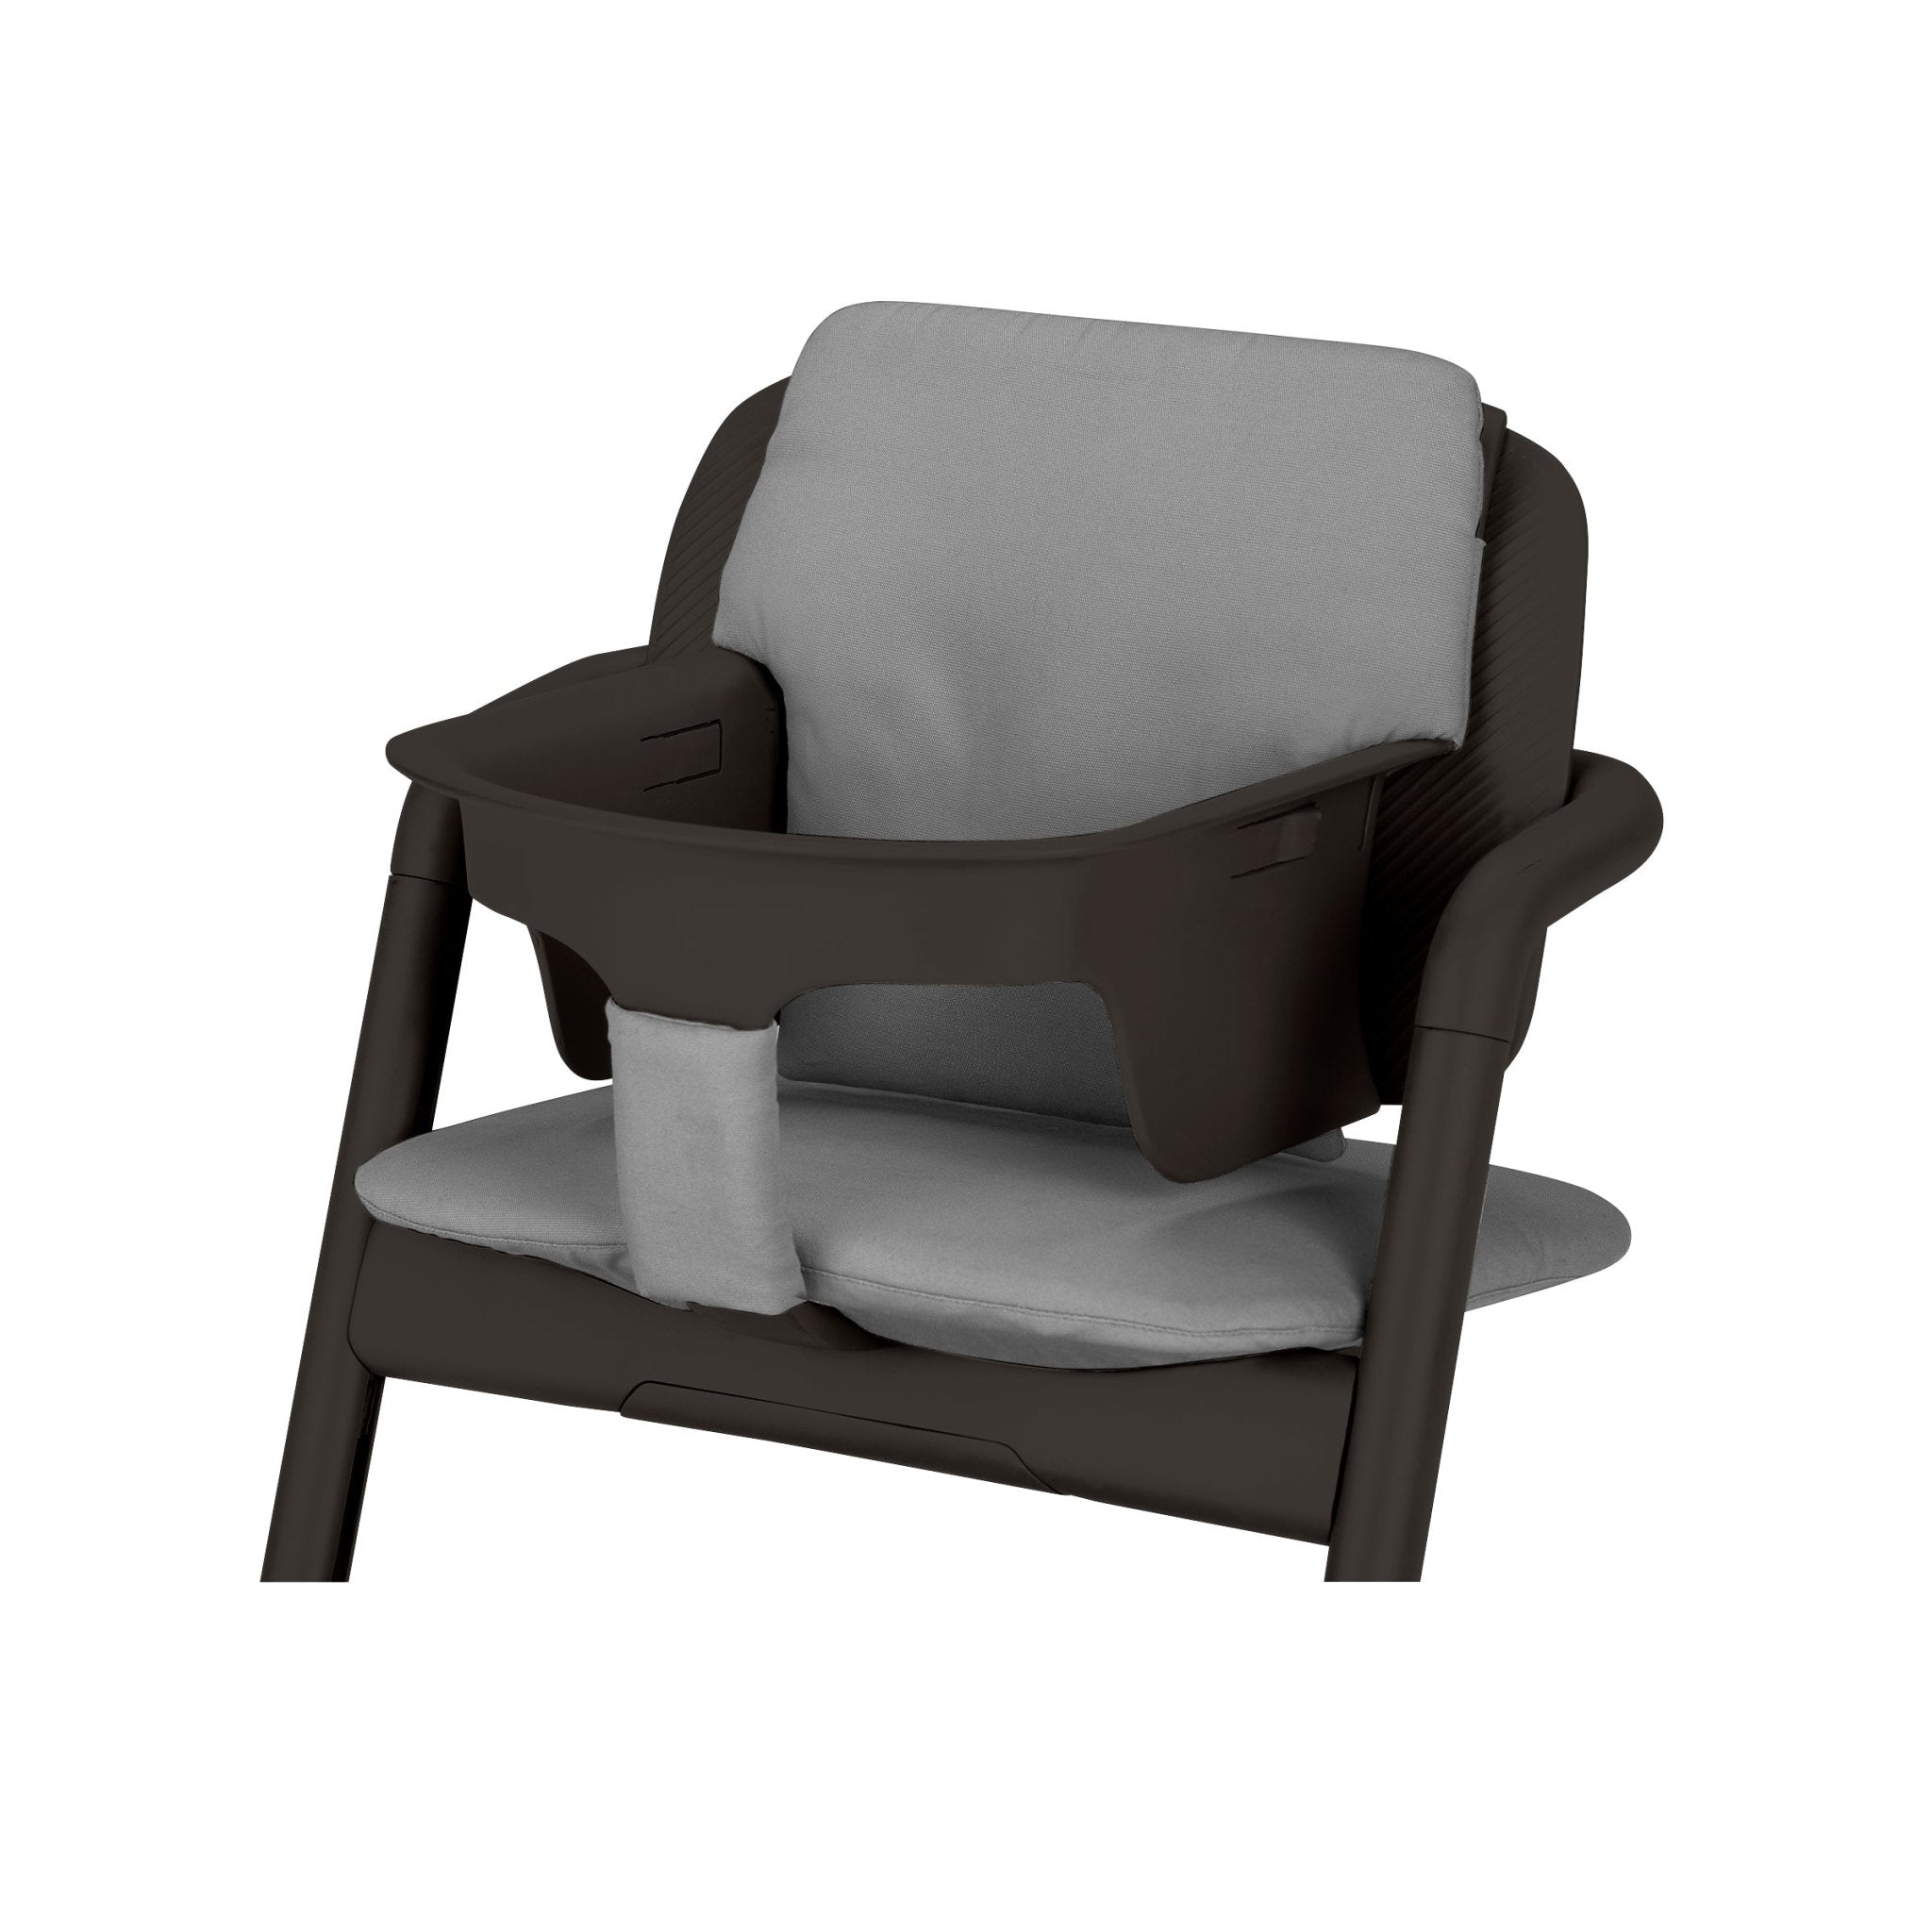 Introducing the CYBEX LEMO Chair 